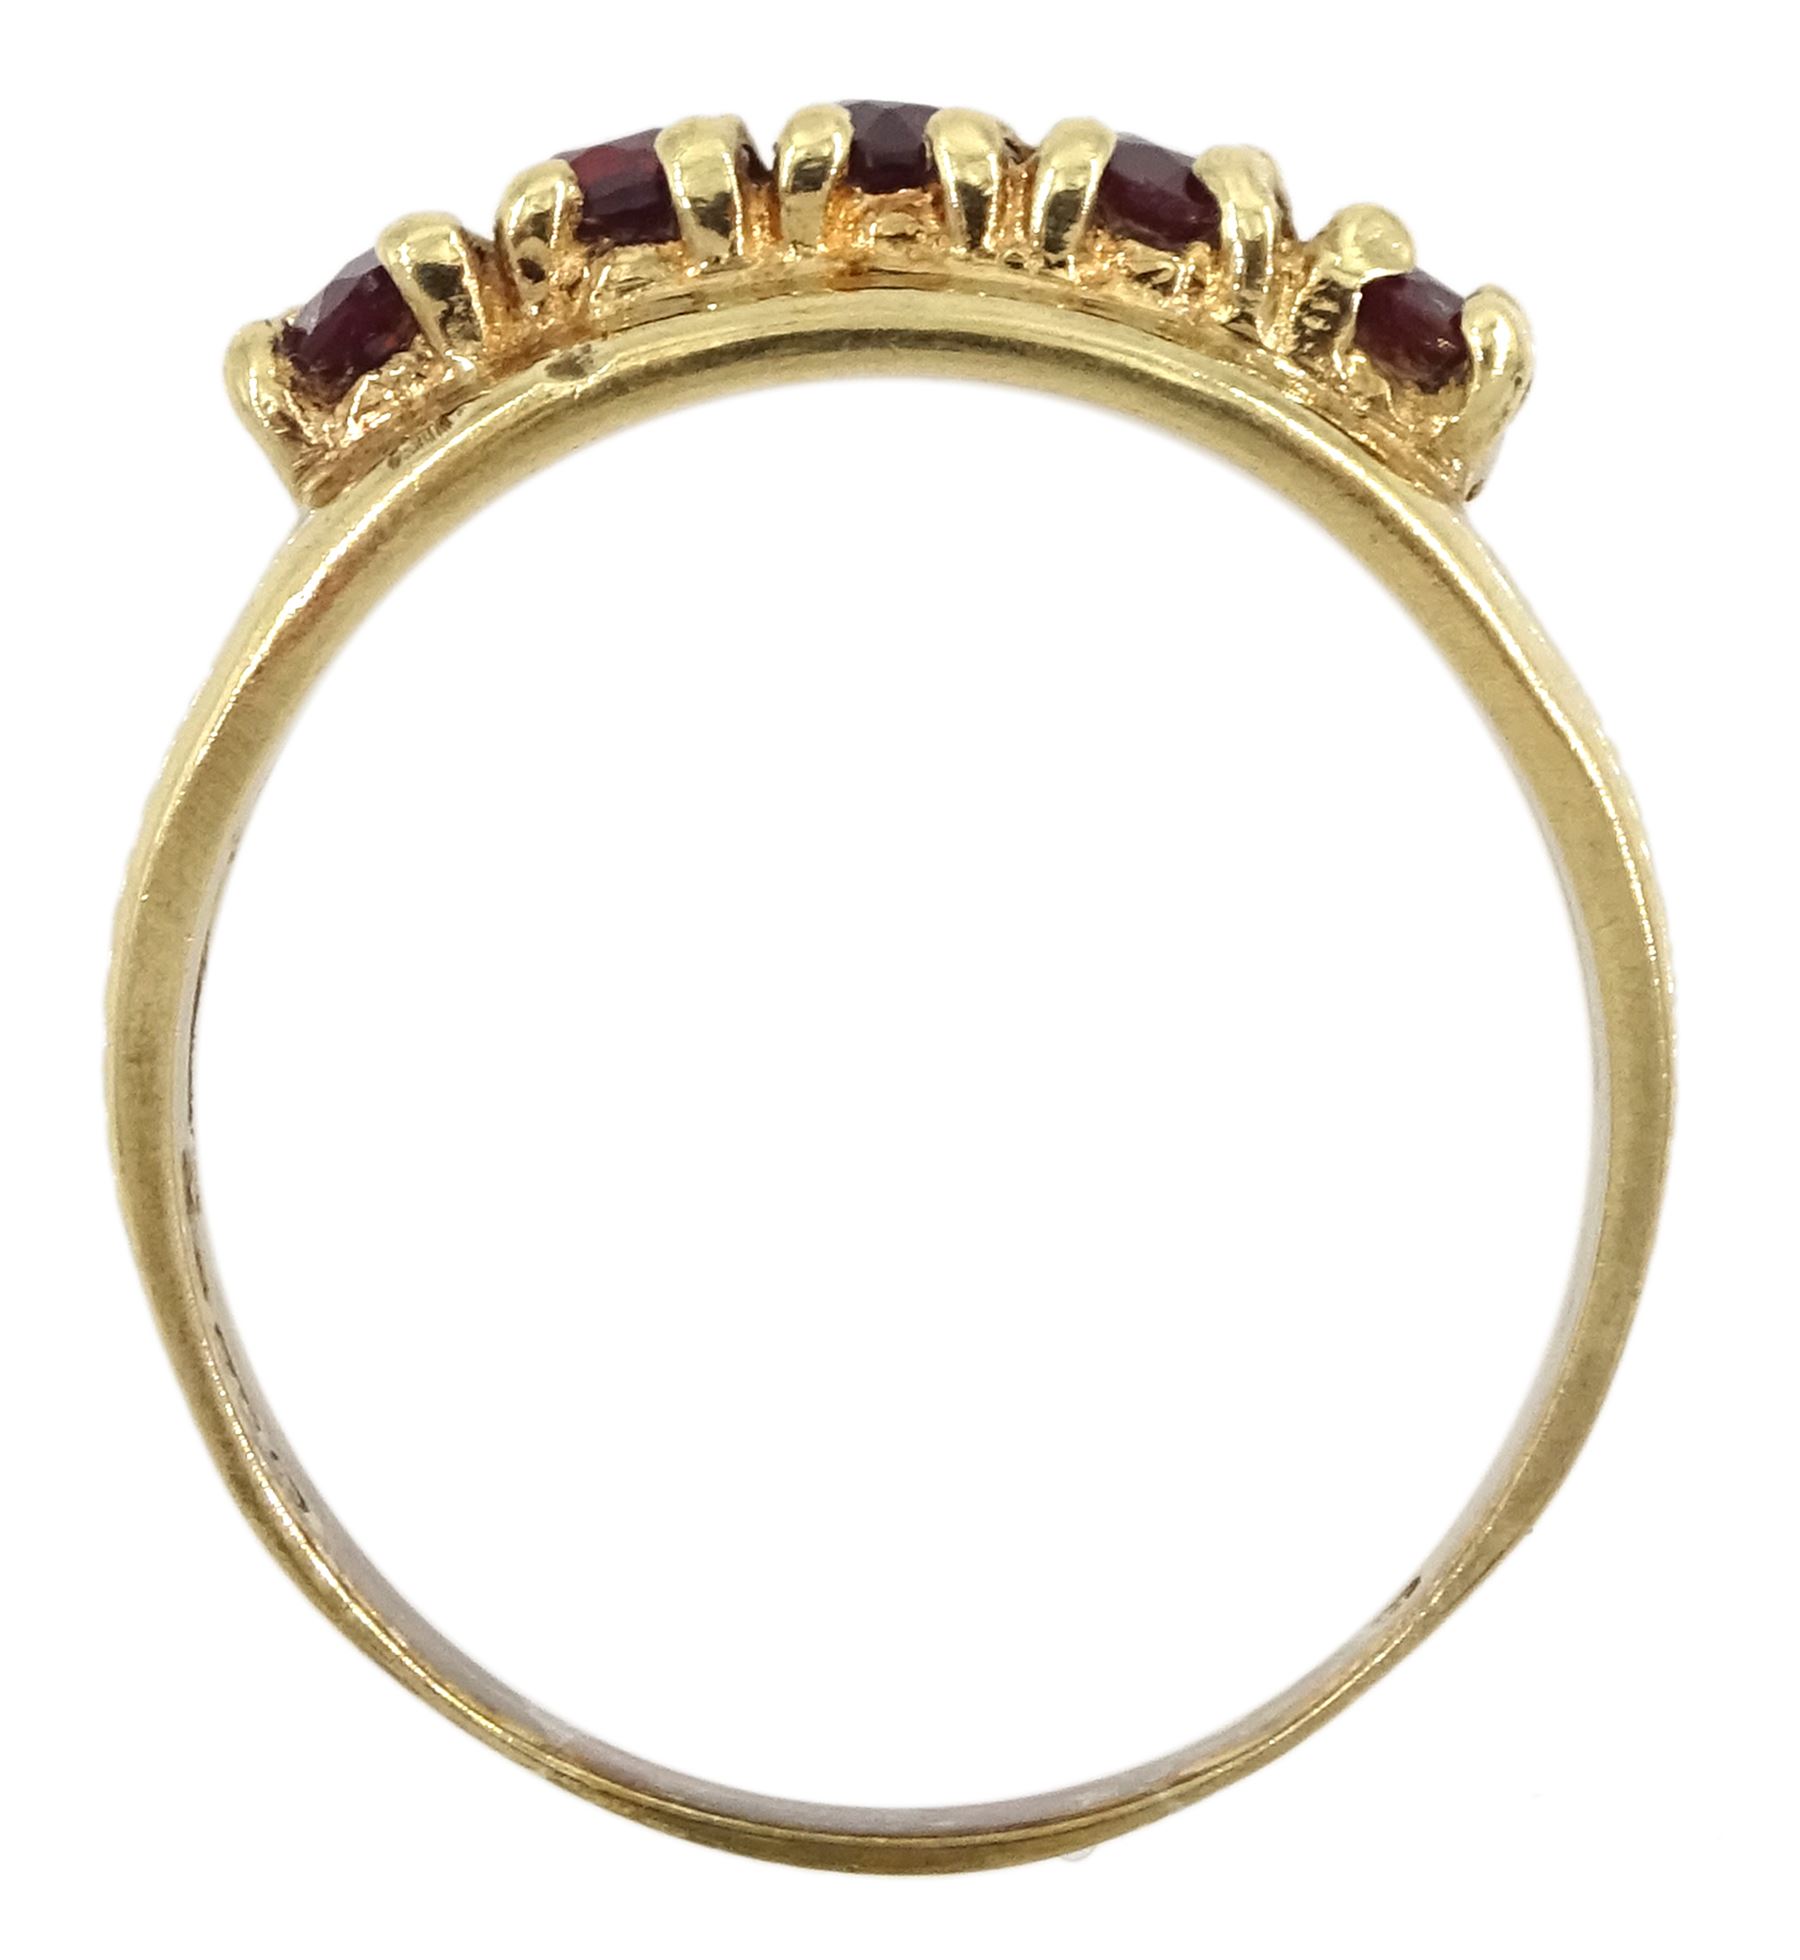 9ct gold five stone garnet ring with split design shank - Image 4 of 4